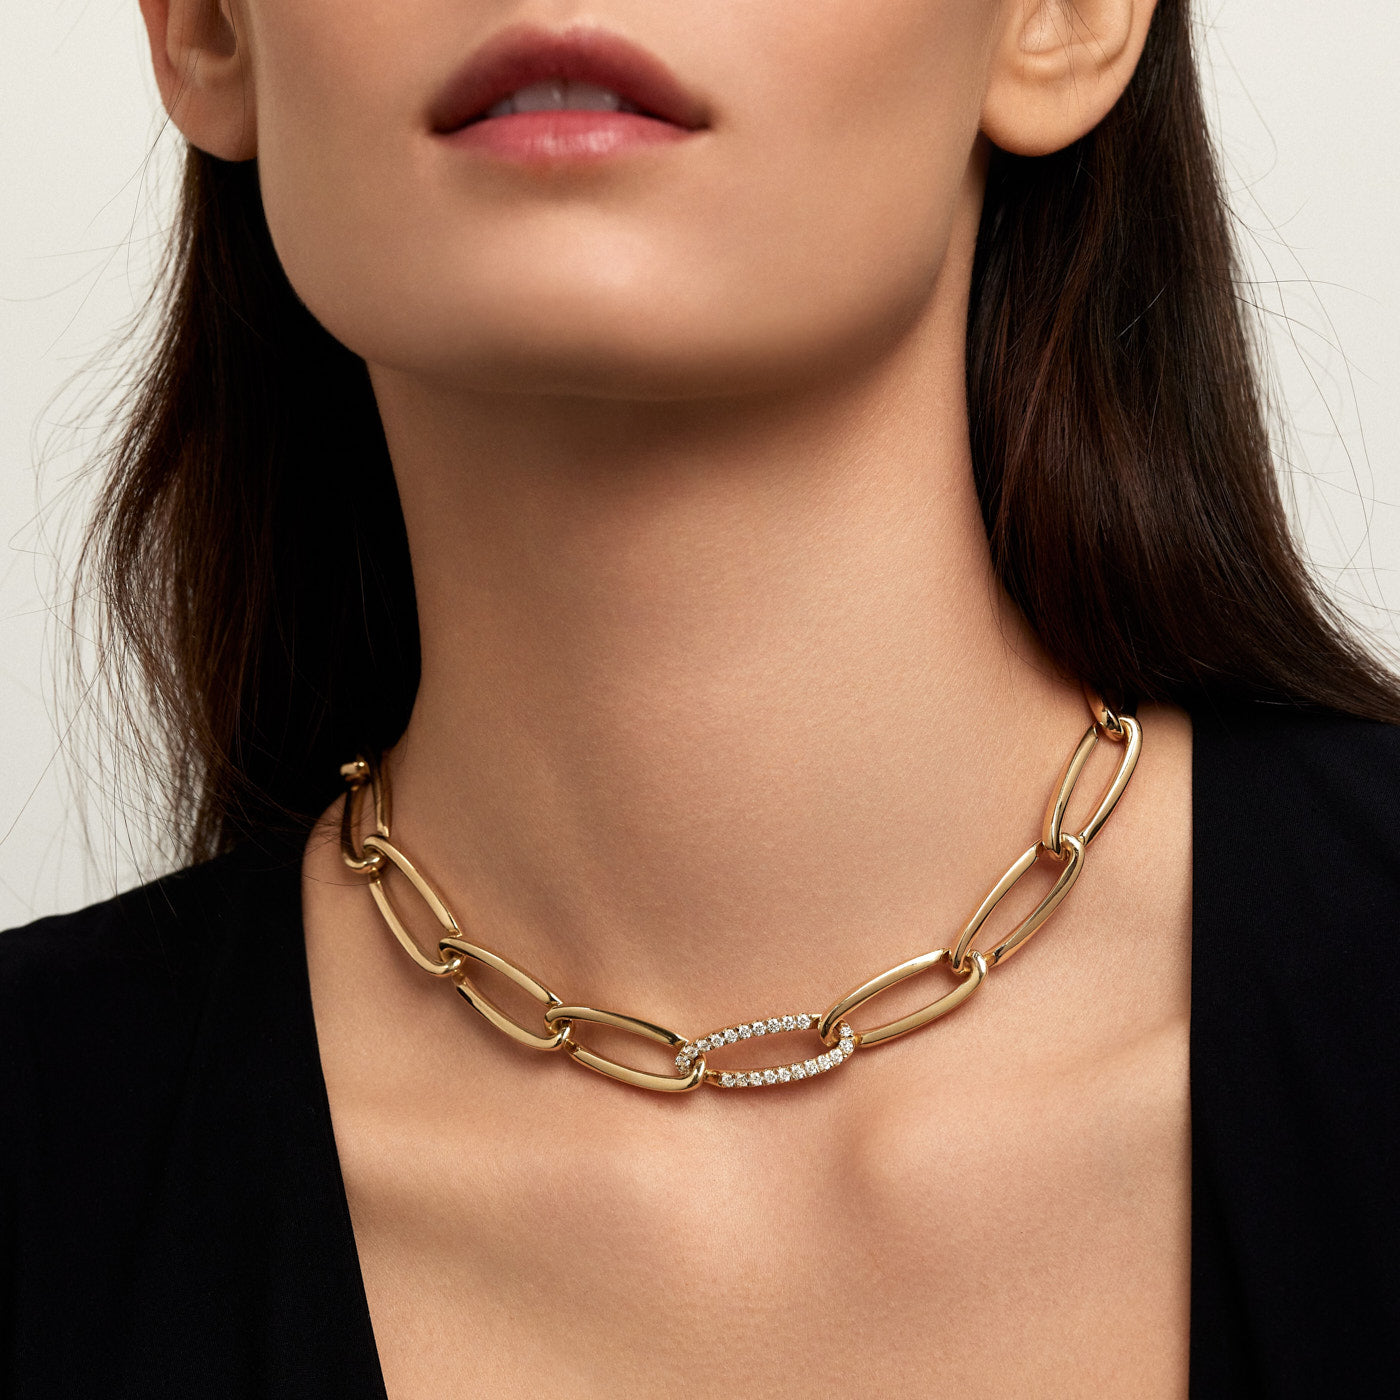 Eclipse Necklace - large - Lulu Designs Jewelry